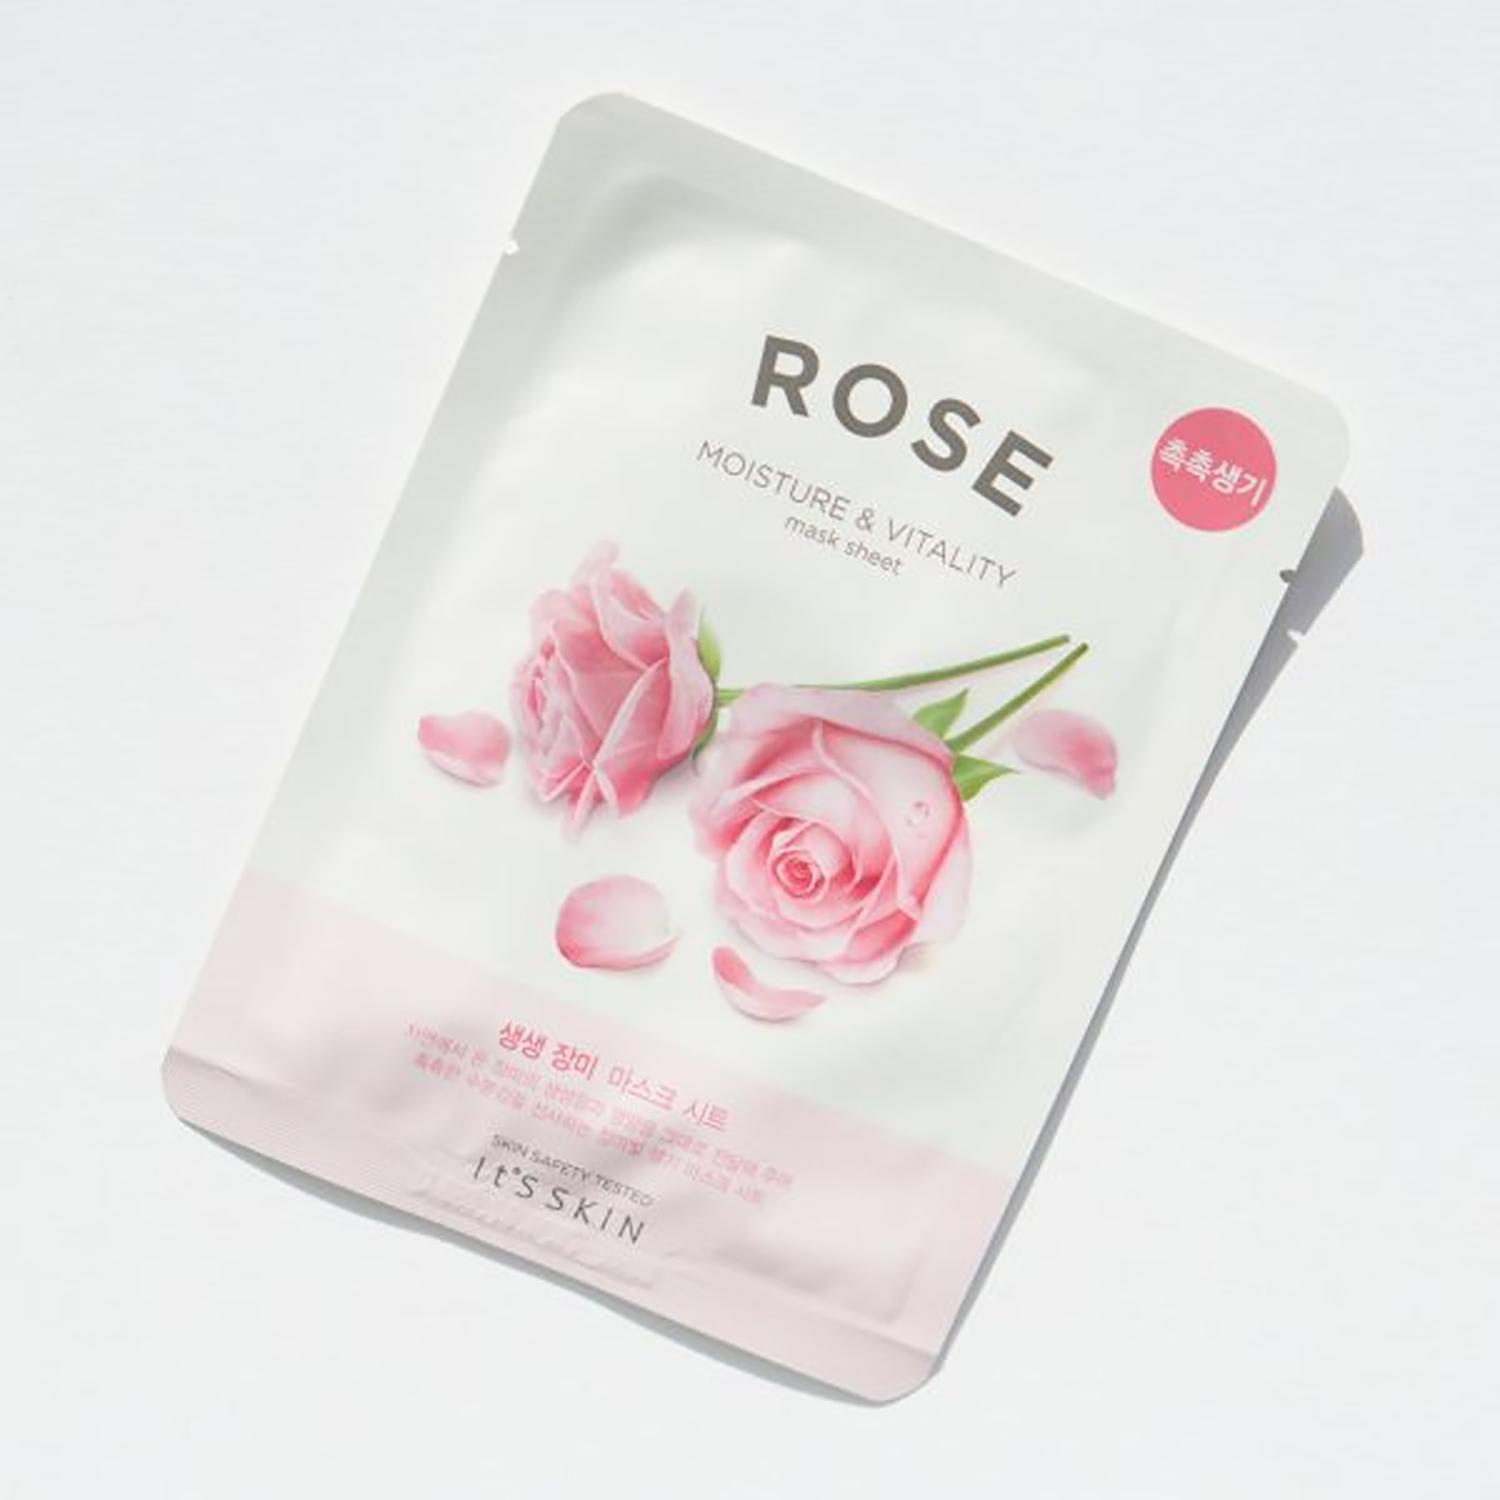 It's Skin The Fresh Mask Sheet - Rose (20 ml)